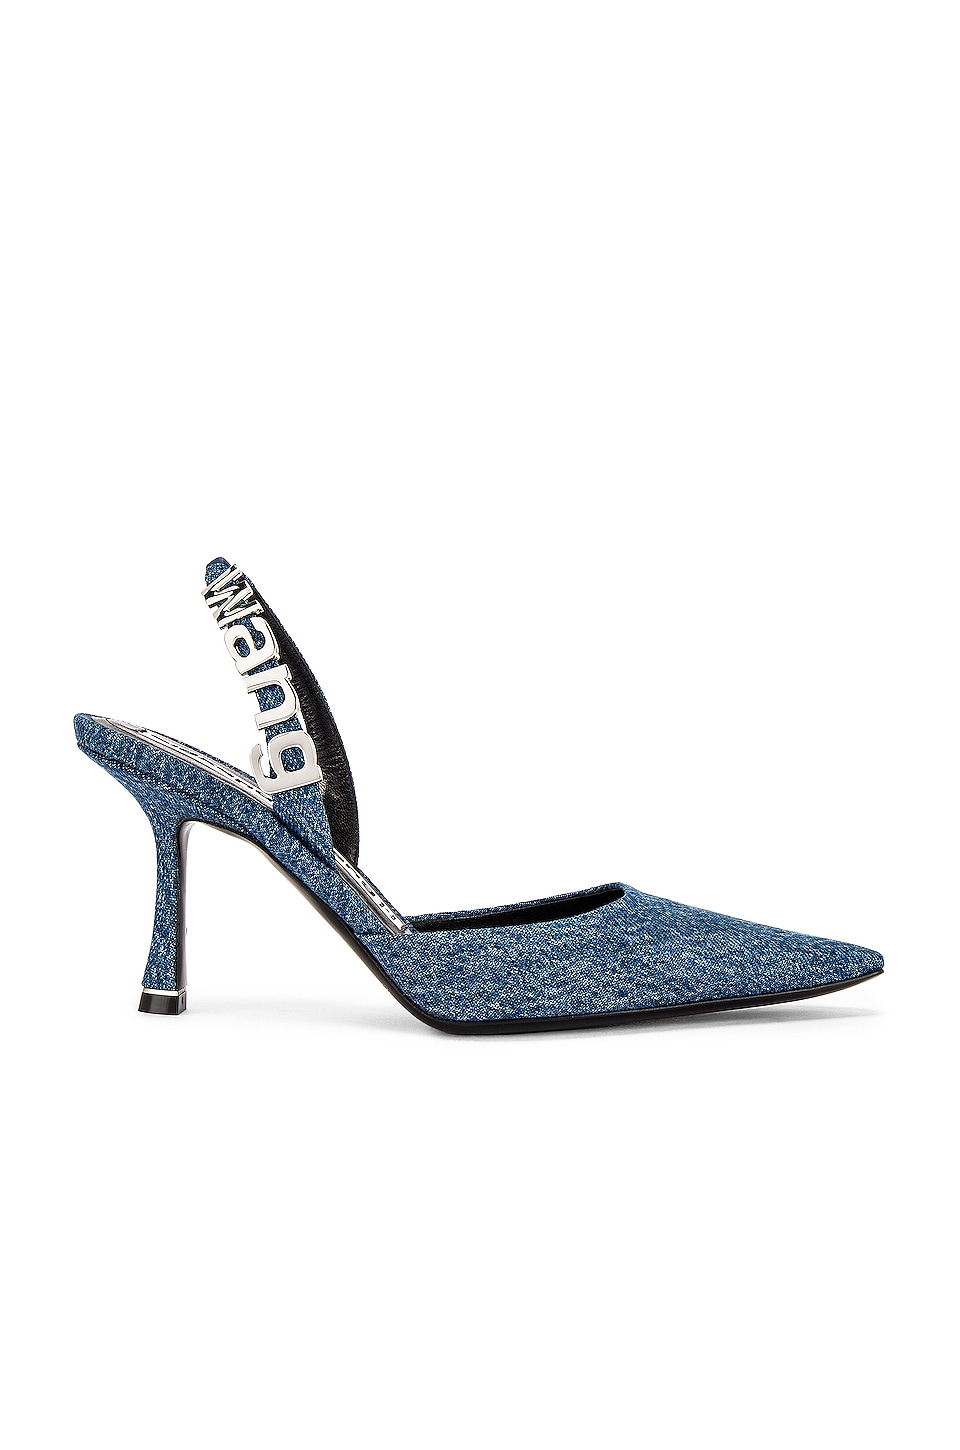 Buy > alexander wang blue heels > in stock